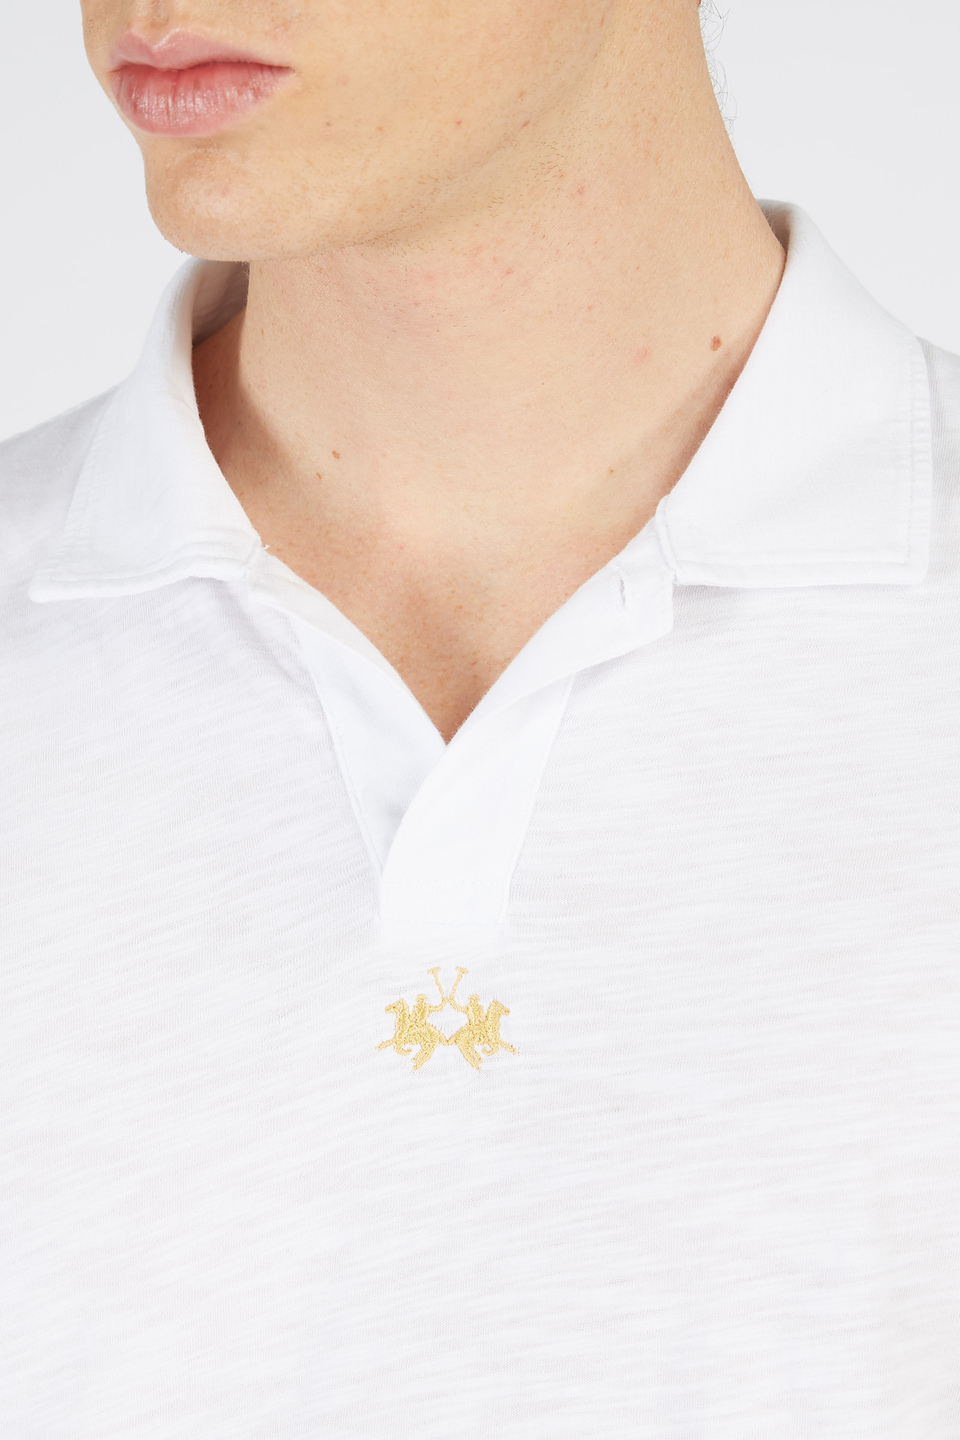 Men's polo shirt in a regular fit - Polo 19-42 | La Martina - Official Online Shop